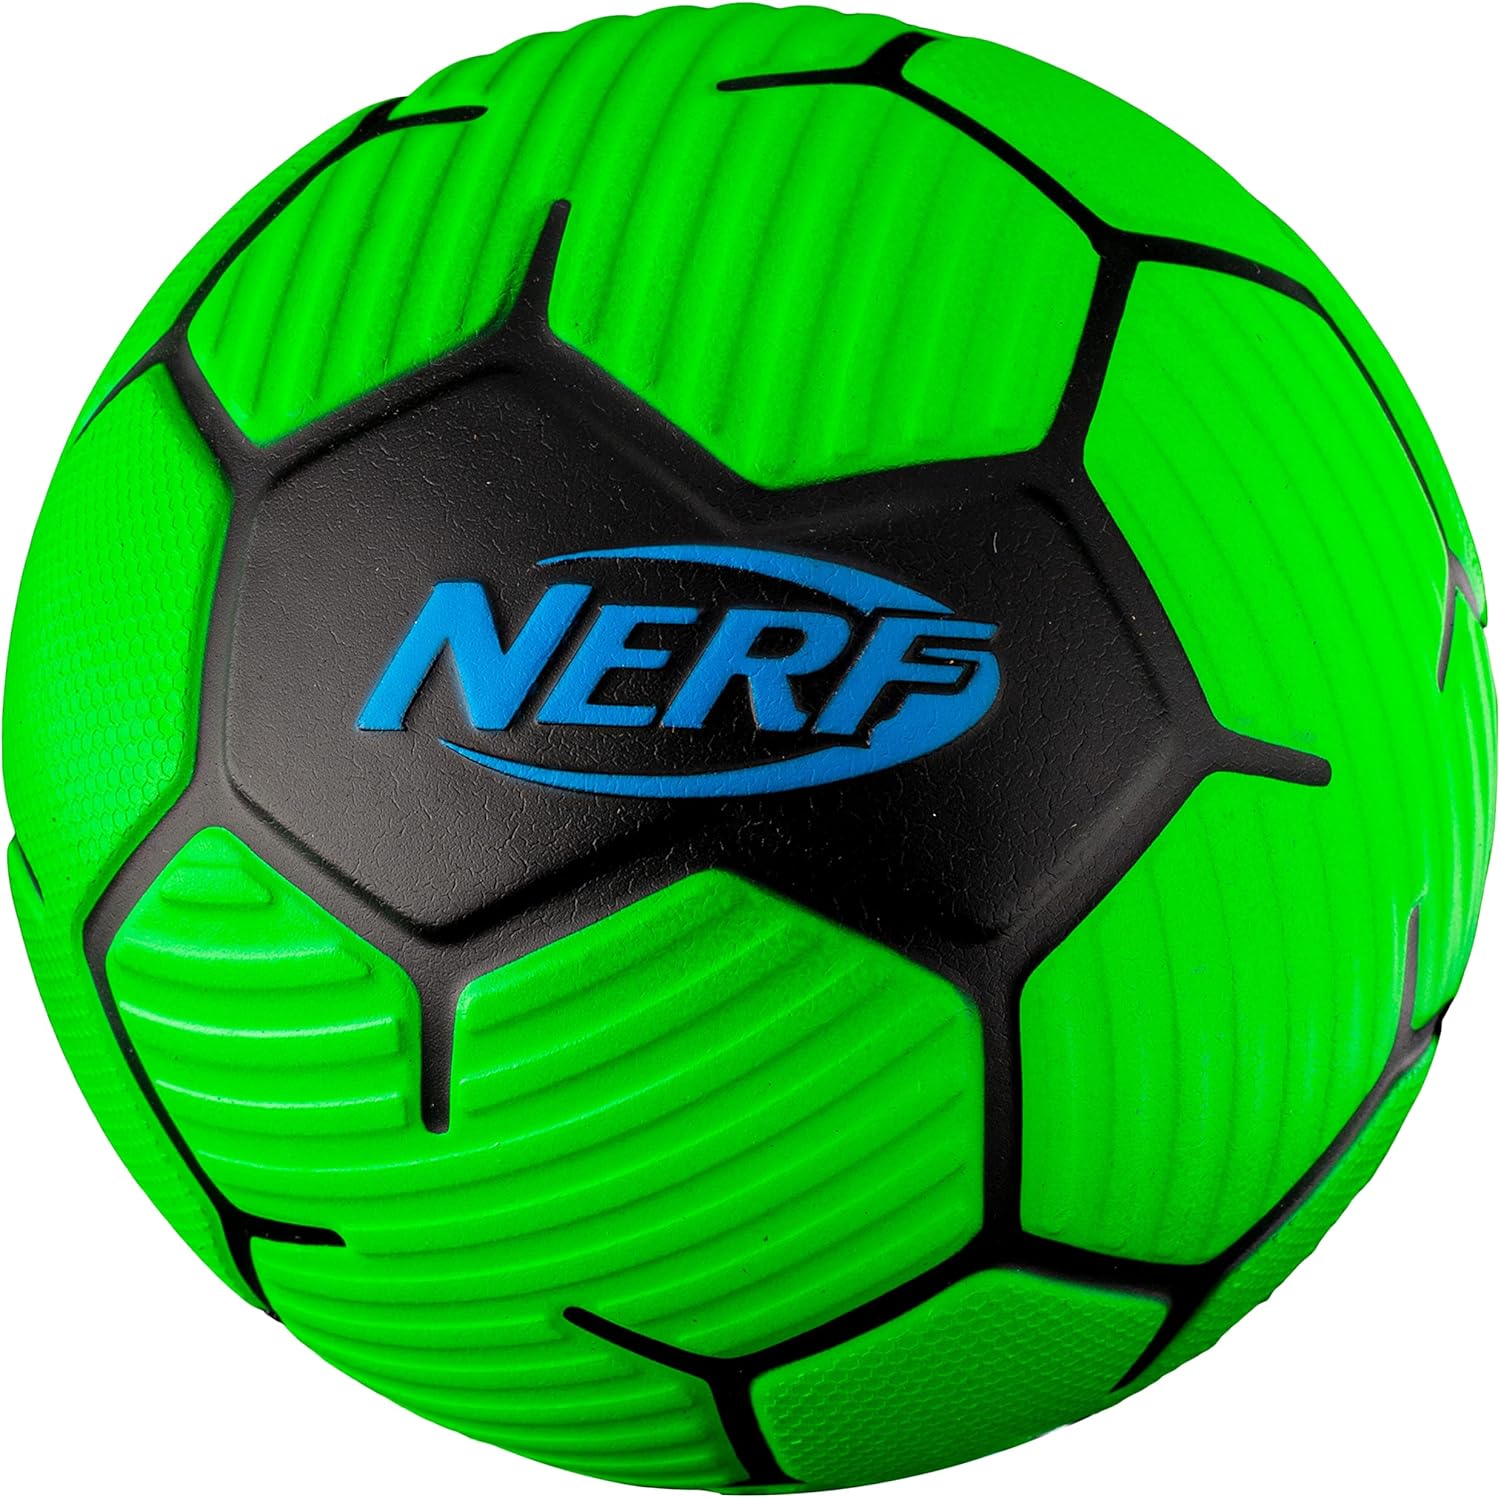 NERF Kids Foam Mini Soccer Ball - Proshot Youth Soft Mini Foam Soccer Ball - 7 Inch Indoor + Outdoor Soccer Ball for Kids - Fun Toy Soccer Ball for Practice + Games